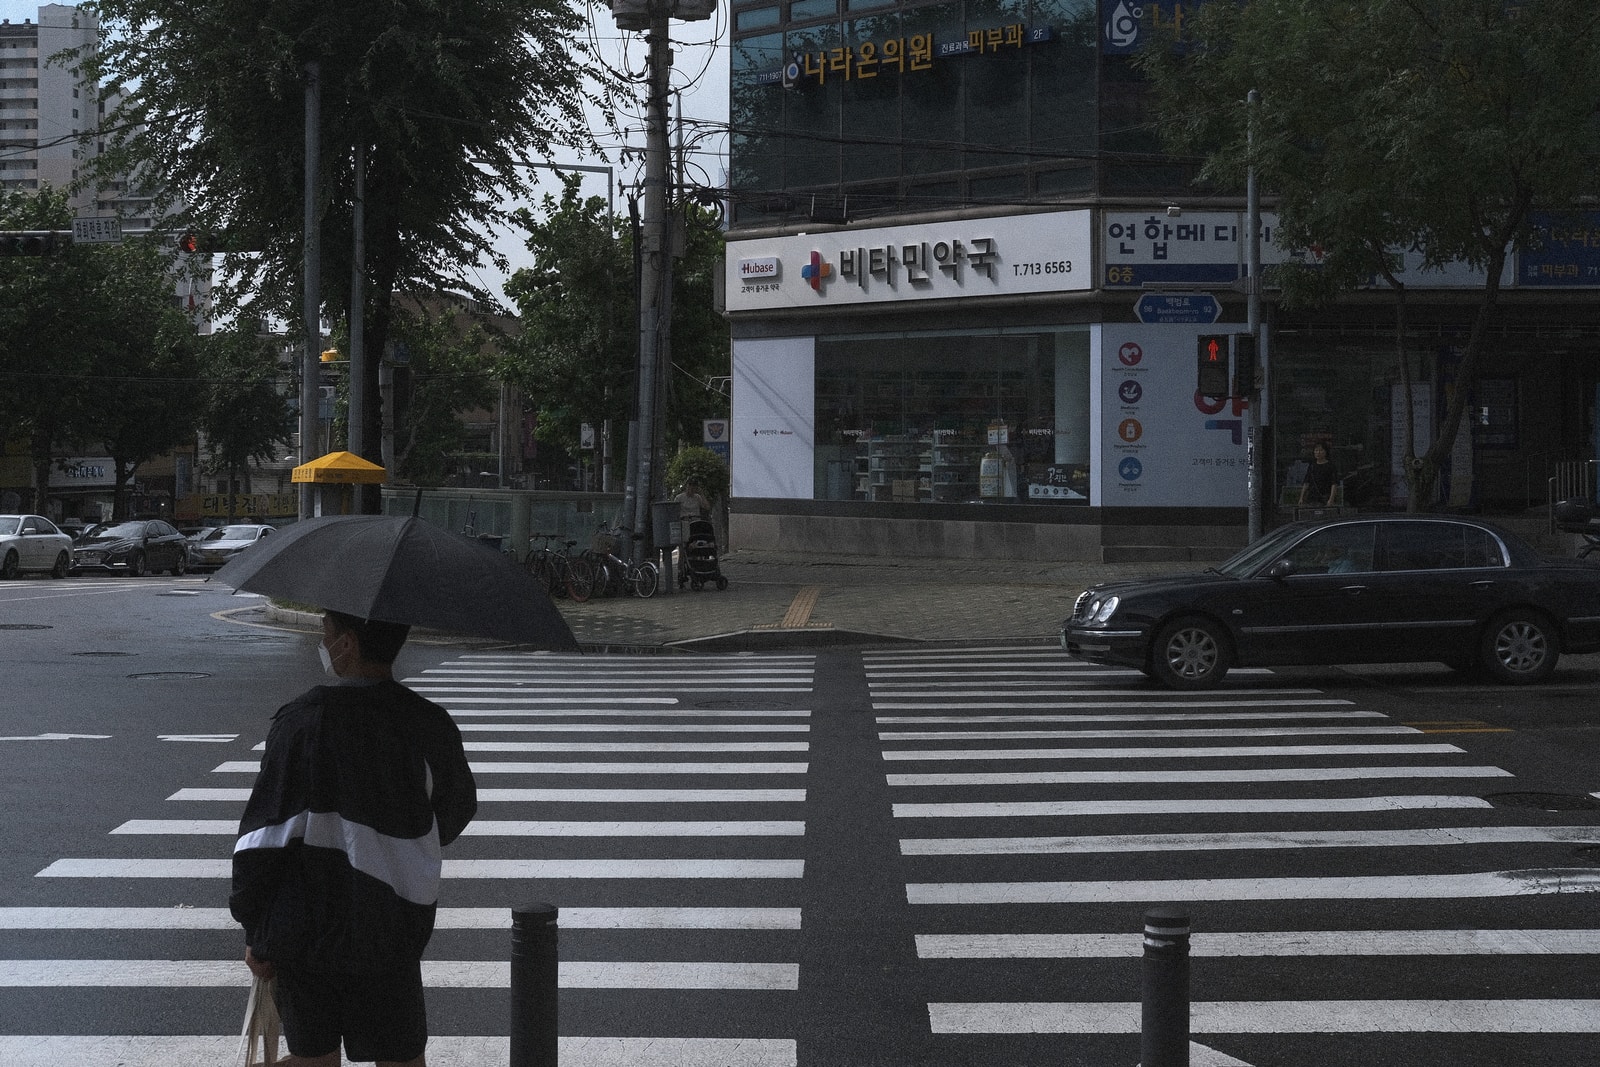 person in black and white jacket holding umbrella walking on pedestrian lane during daytime